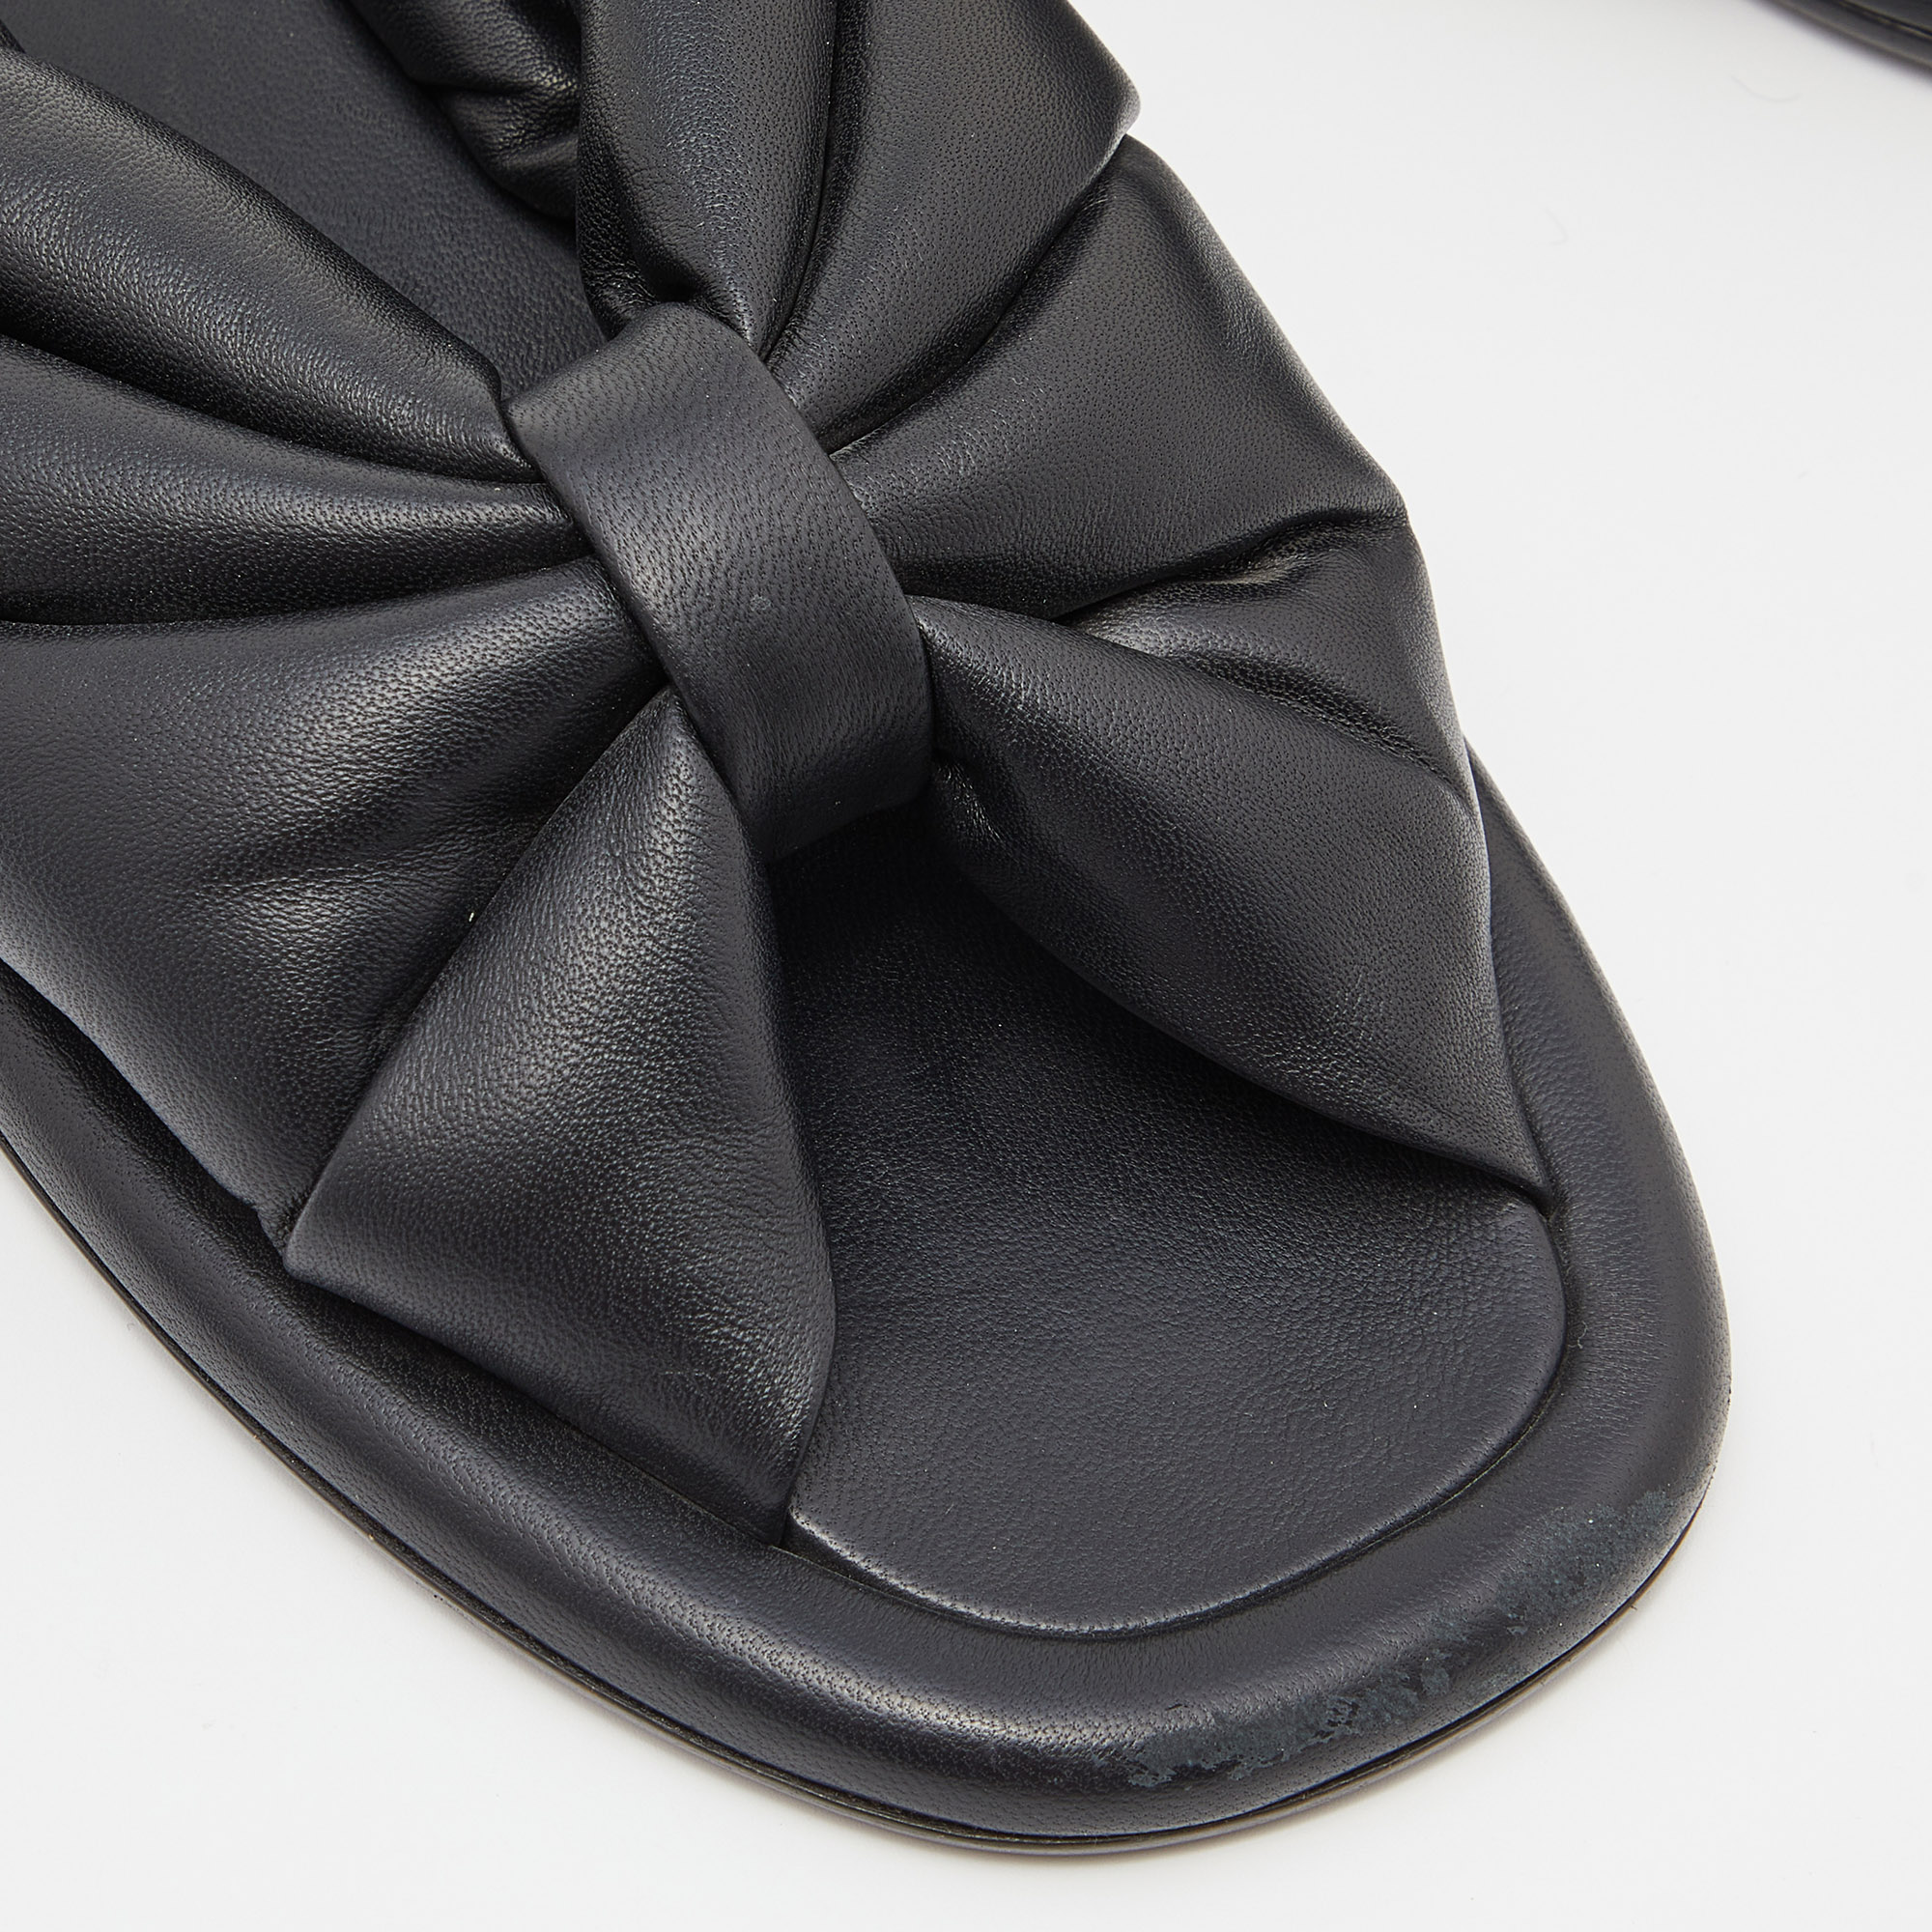 Balenciaga Black Leather Drapy Flats Slides Size 37